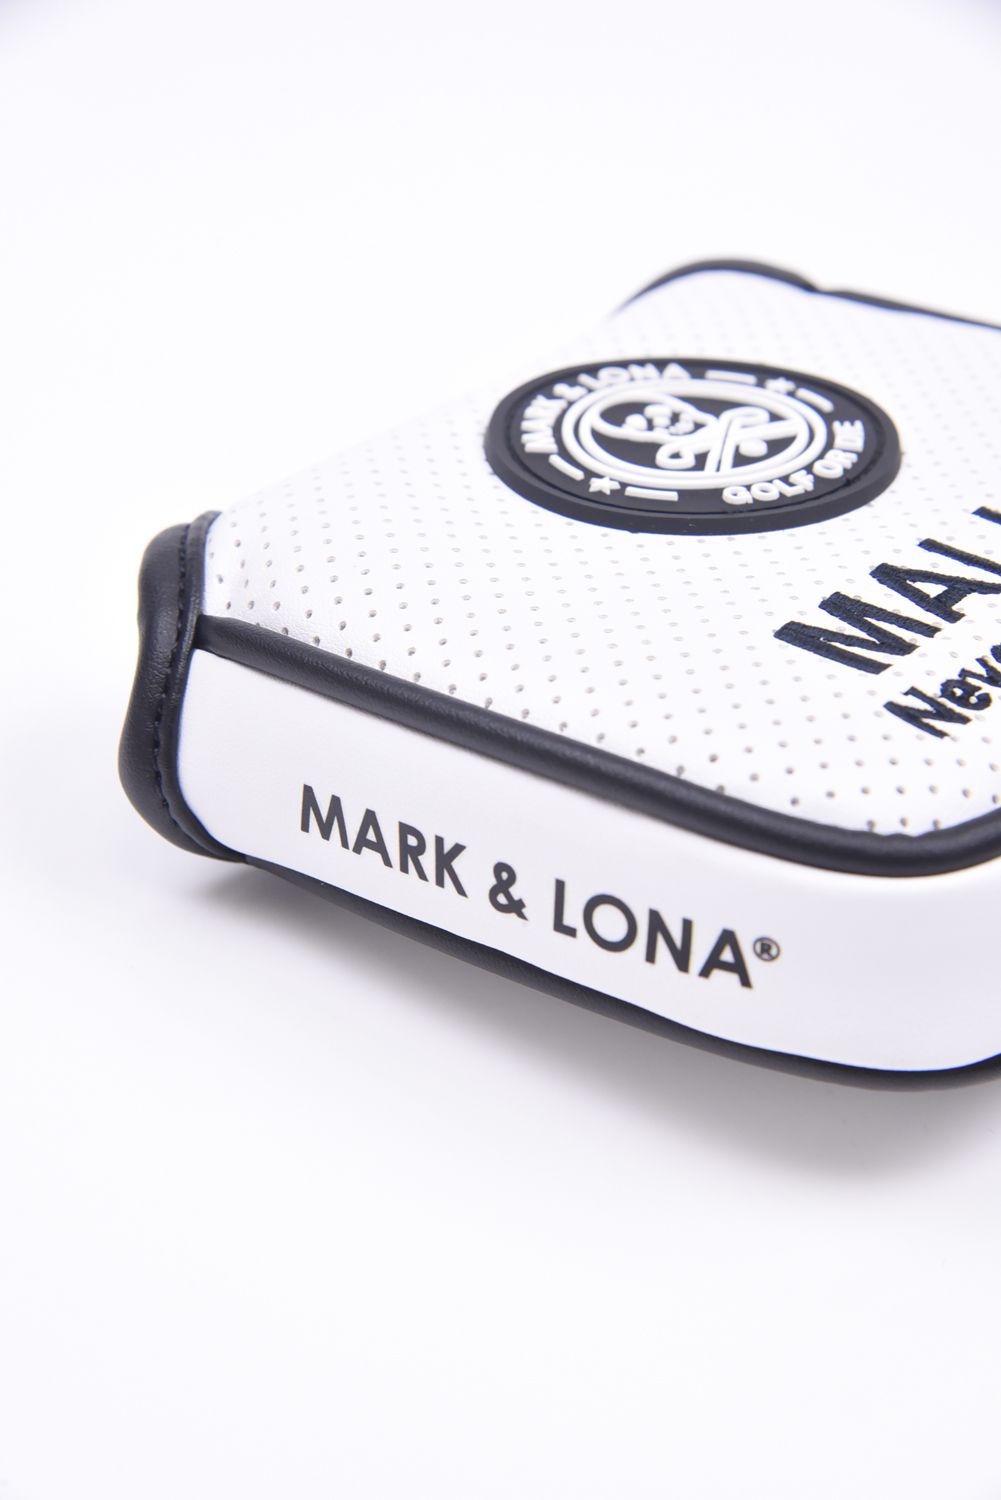 MARK&LONA - MASSIVE MALLET COVER / シンセティックパンチング